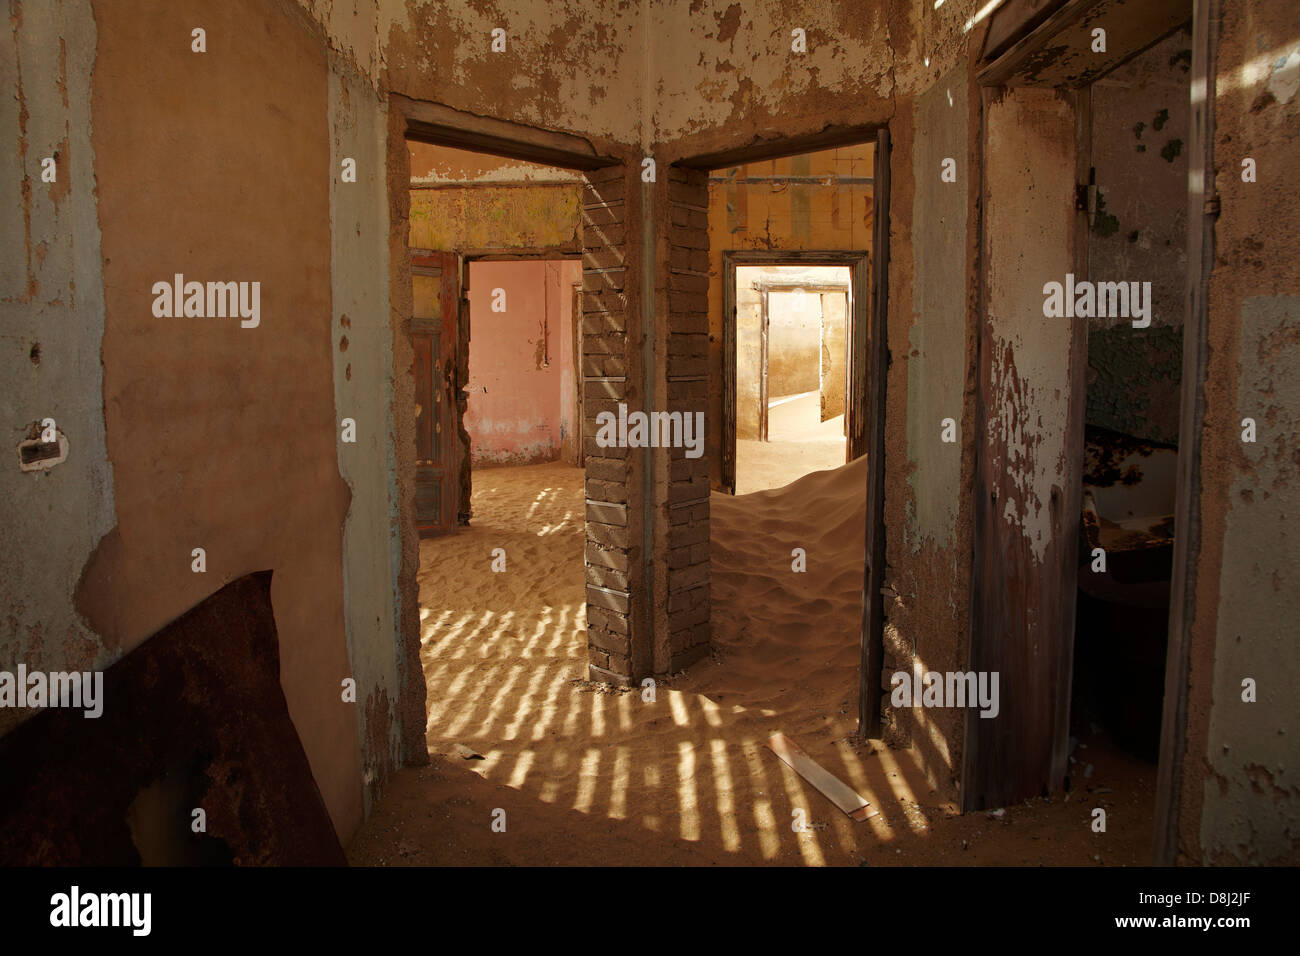 Sand and doorways inside abandoned house, Kolmanskop Ghost Town, near Luderitz, Namibia, Africa Stock Photo